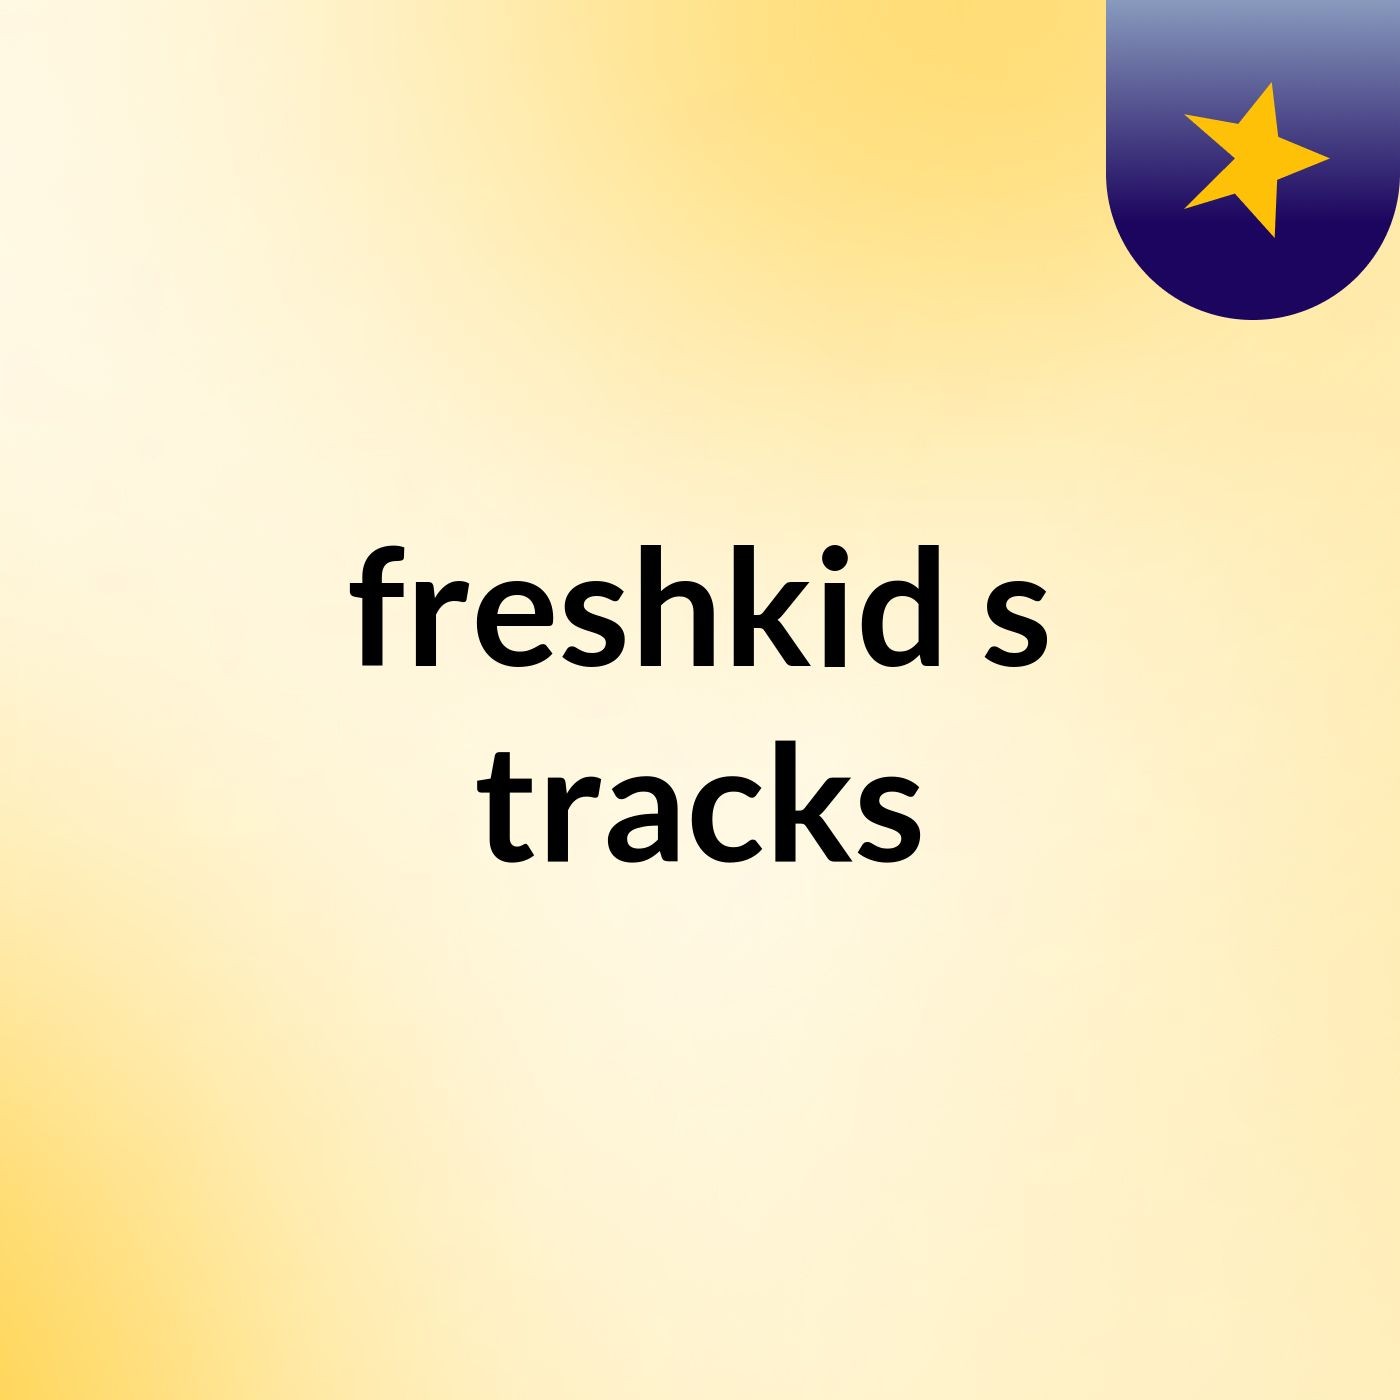 freshkid's tracks